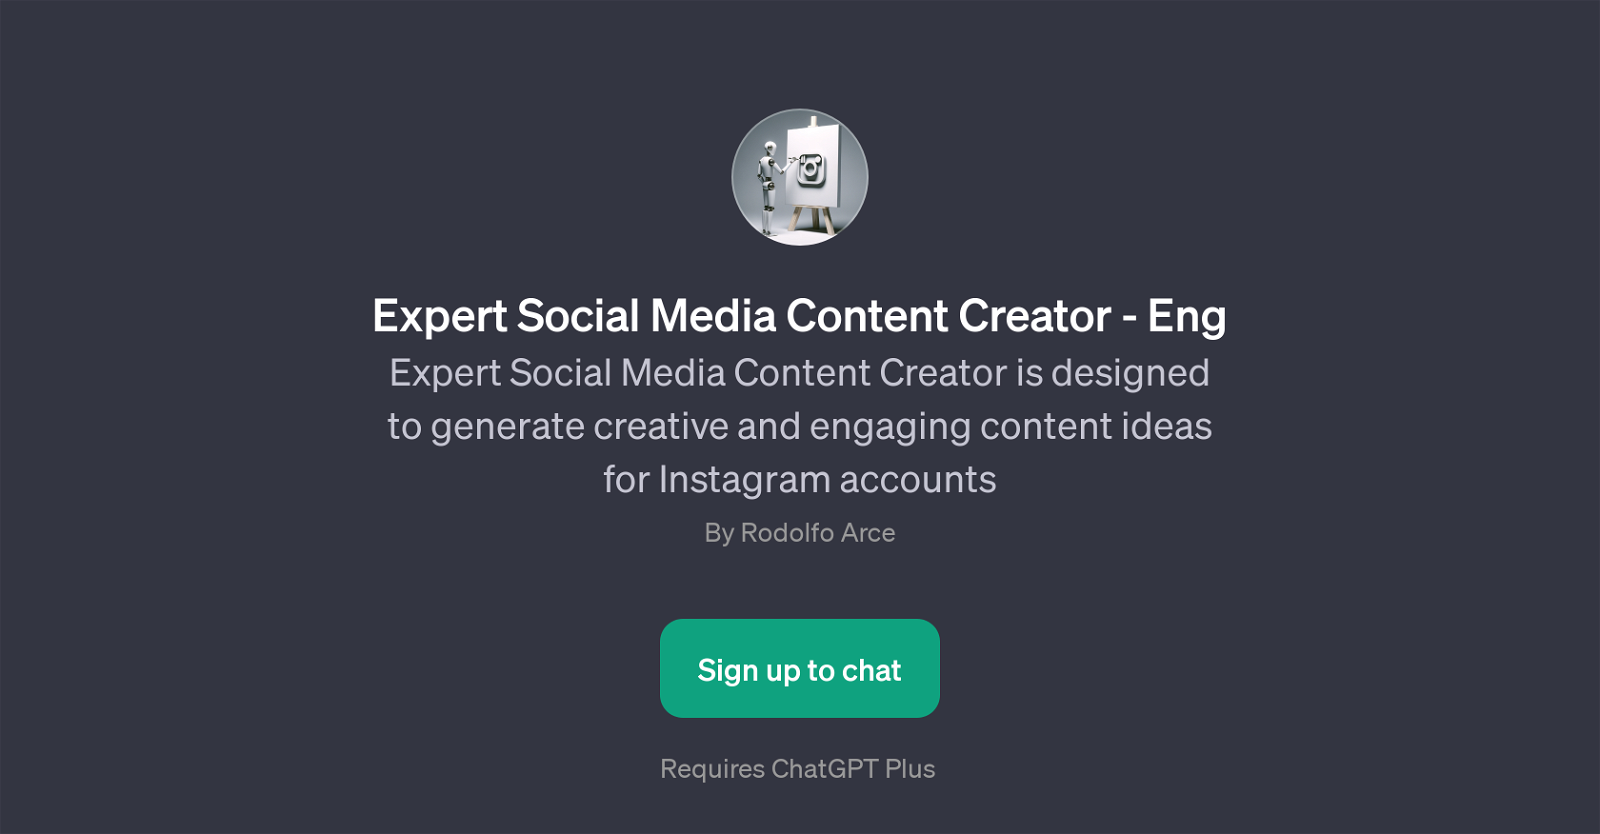 Expert Social Media Content Creator - Eng website